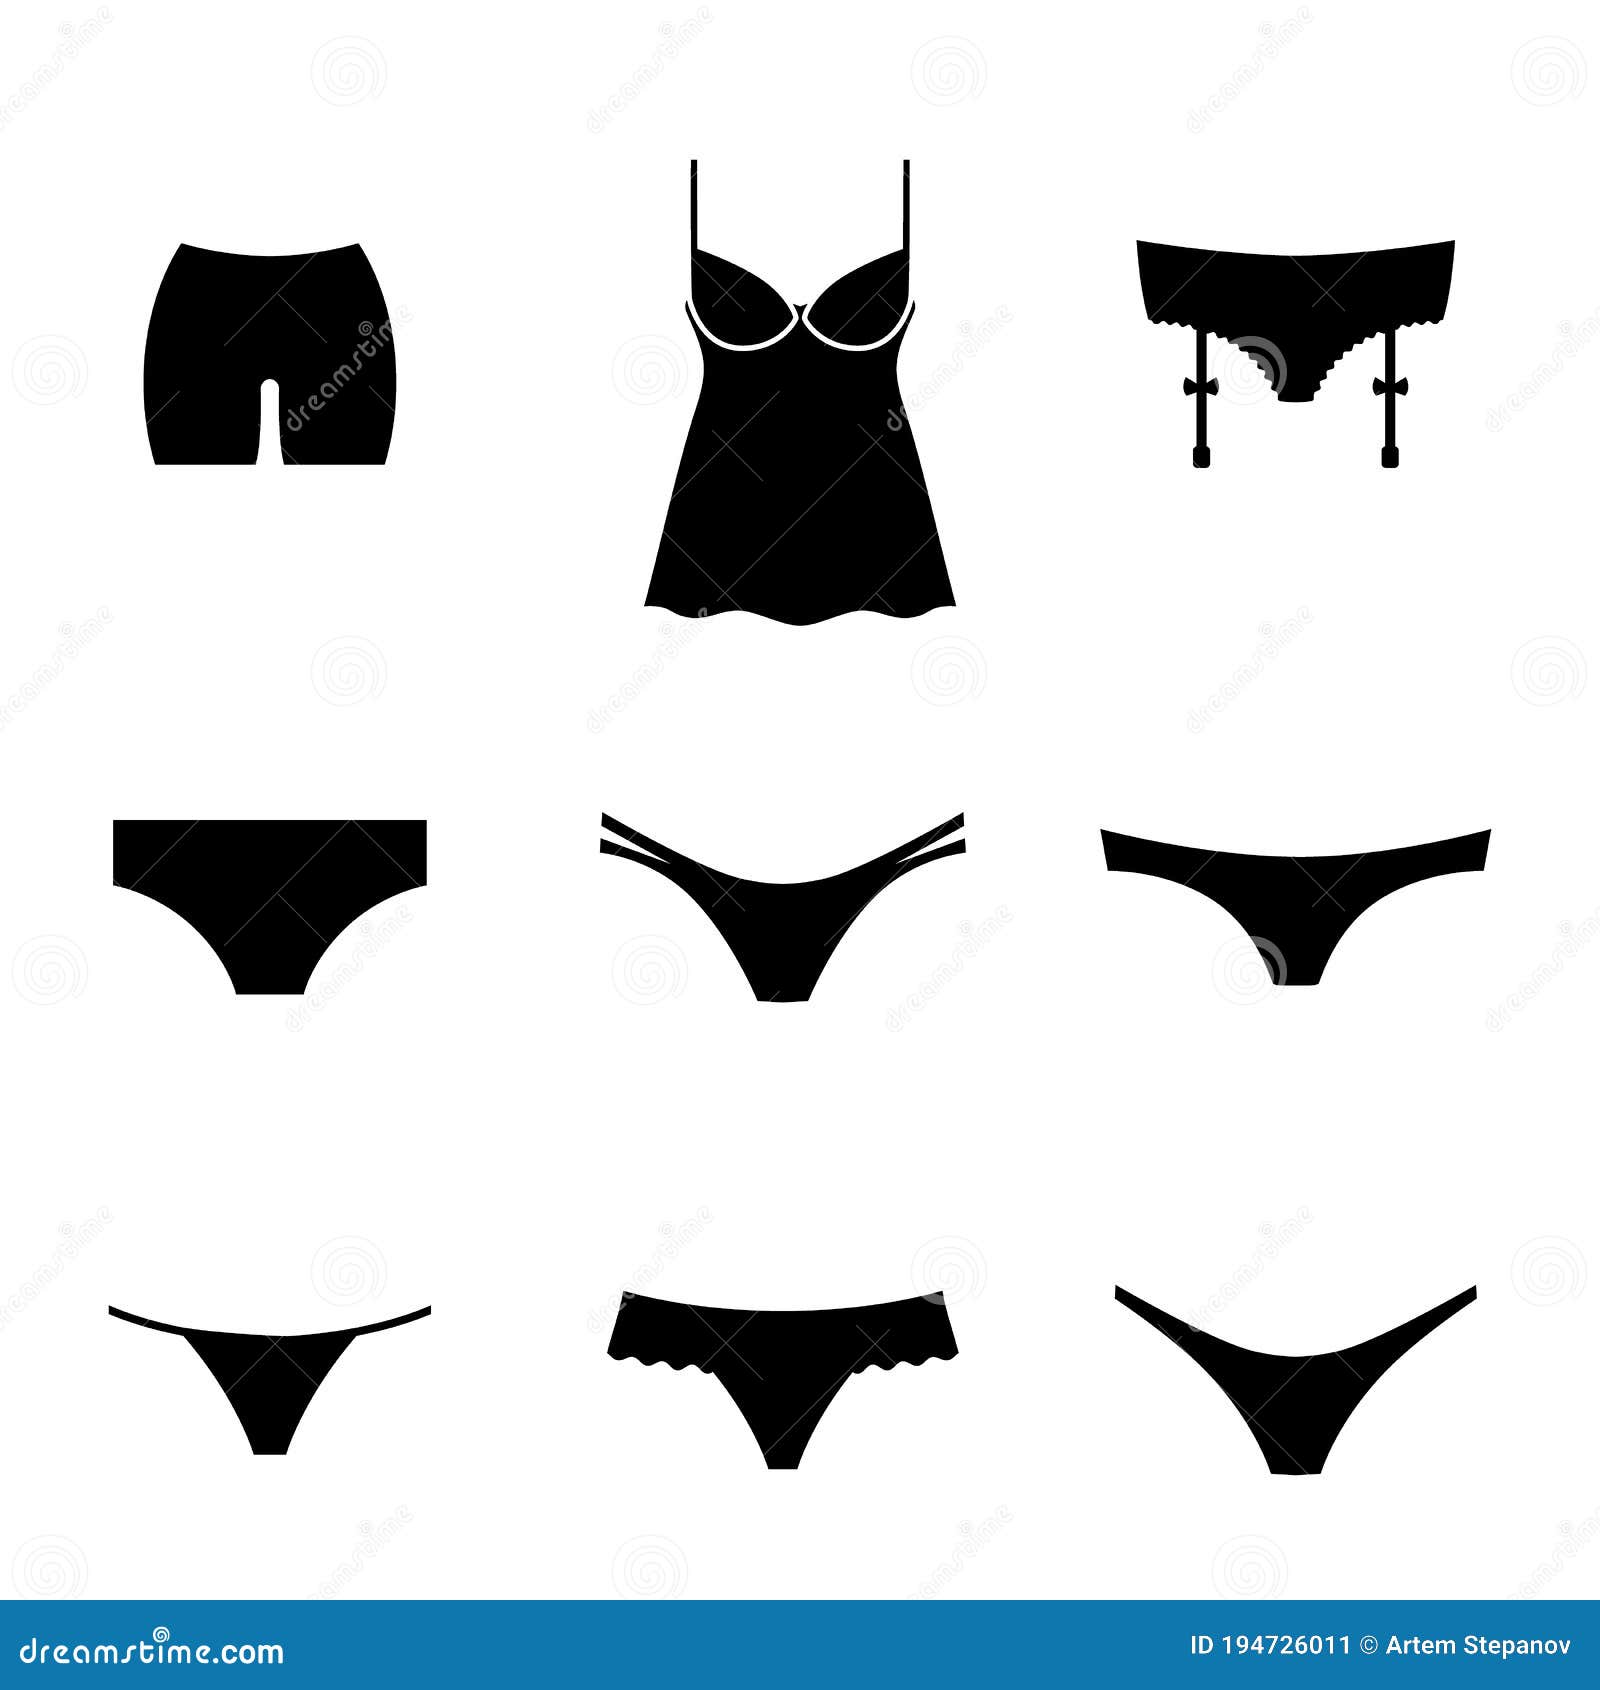 Vetor do Stock: Fashion female underwear icons. Feminine lacy